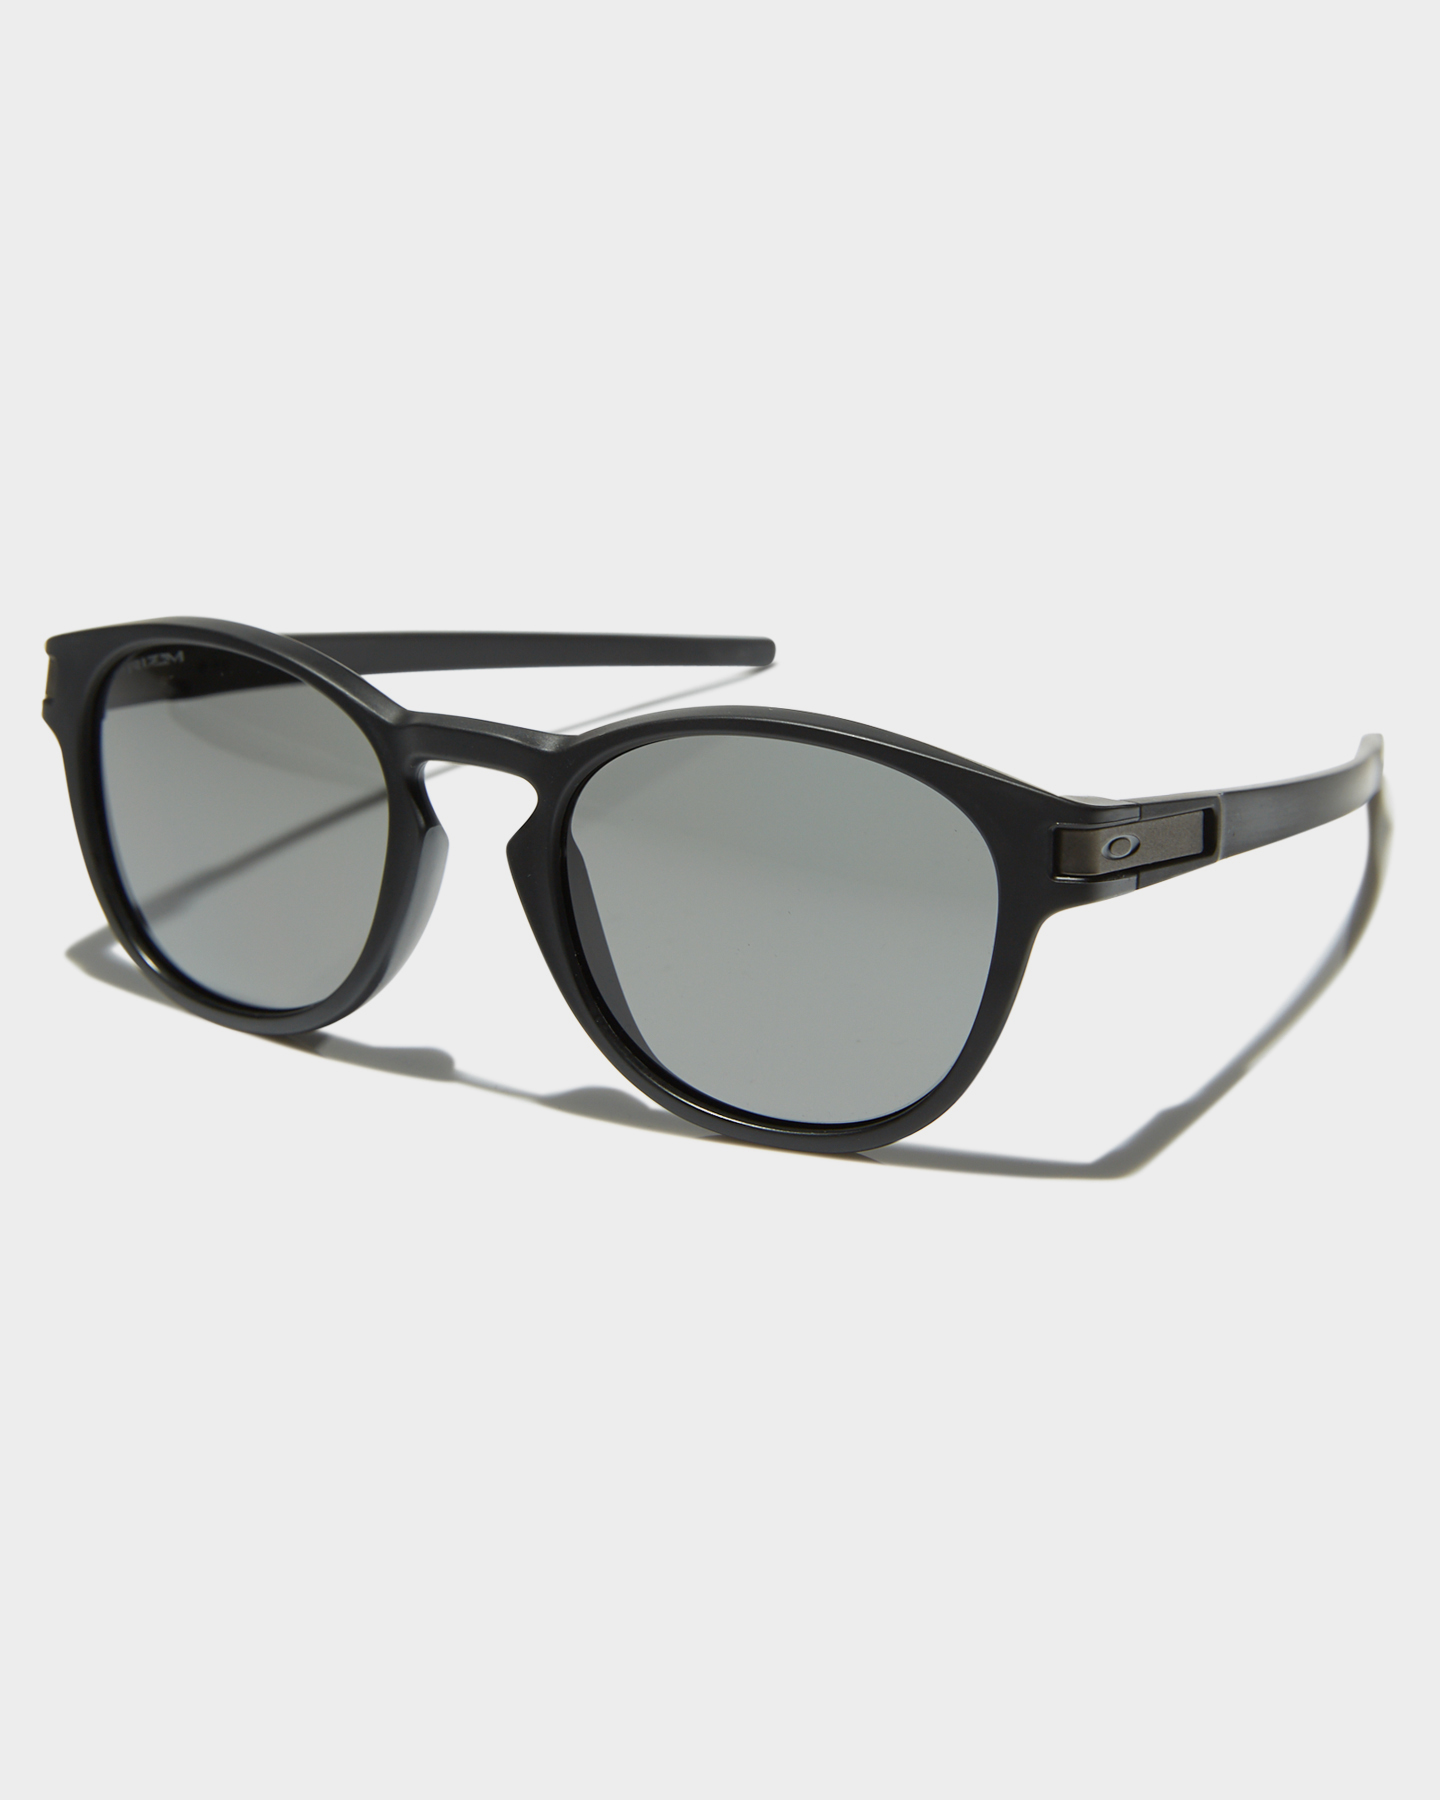 oakley sunglasses grey